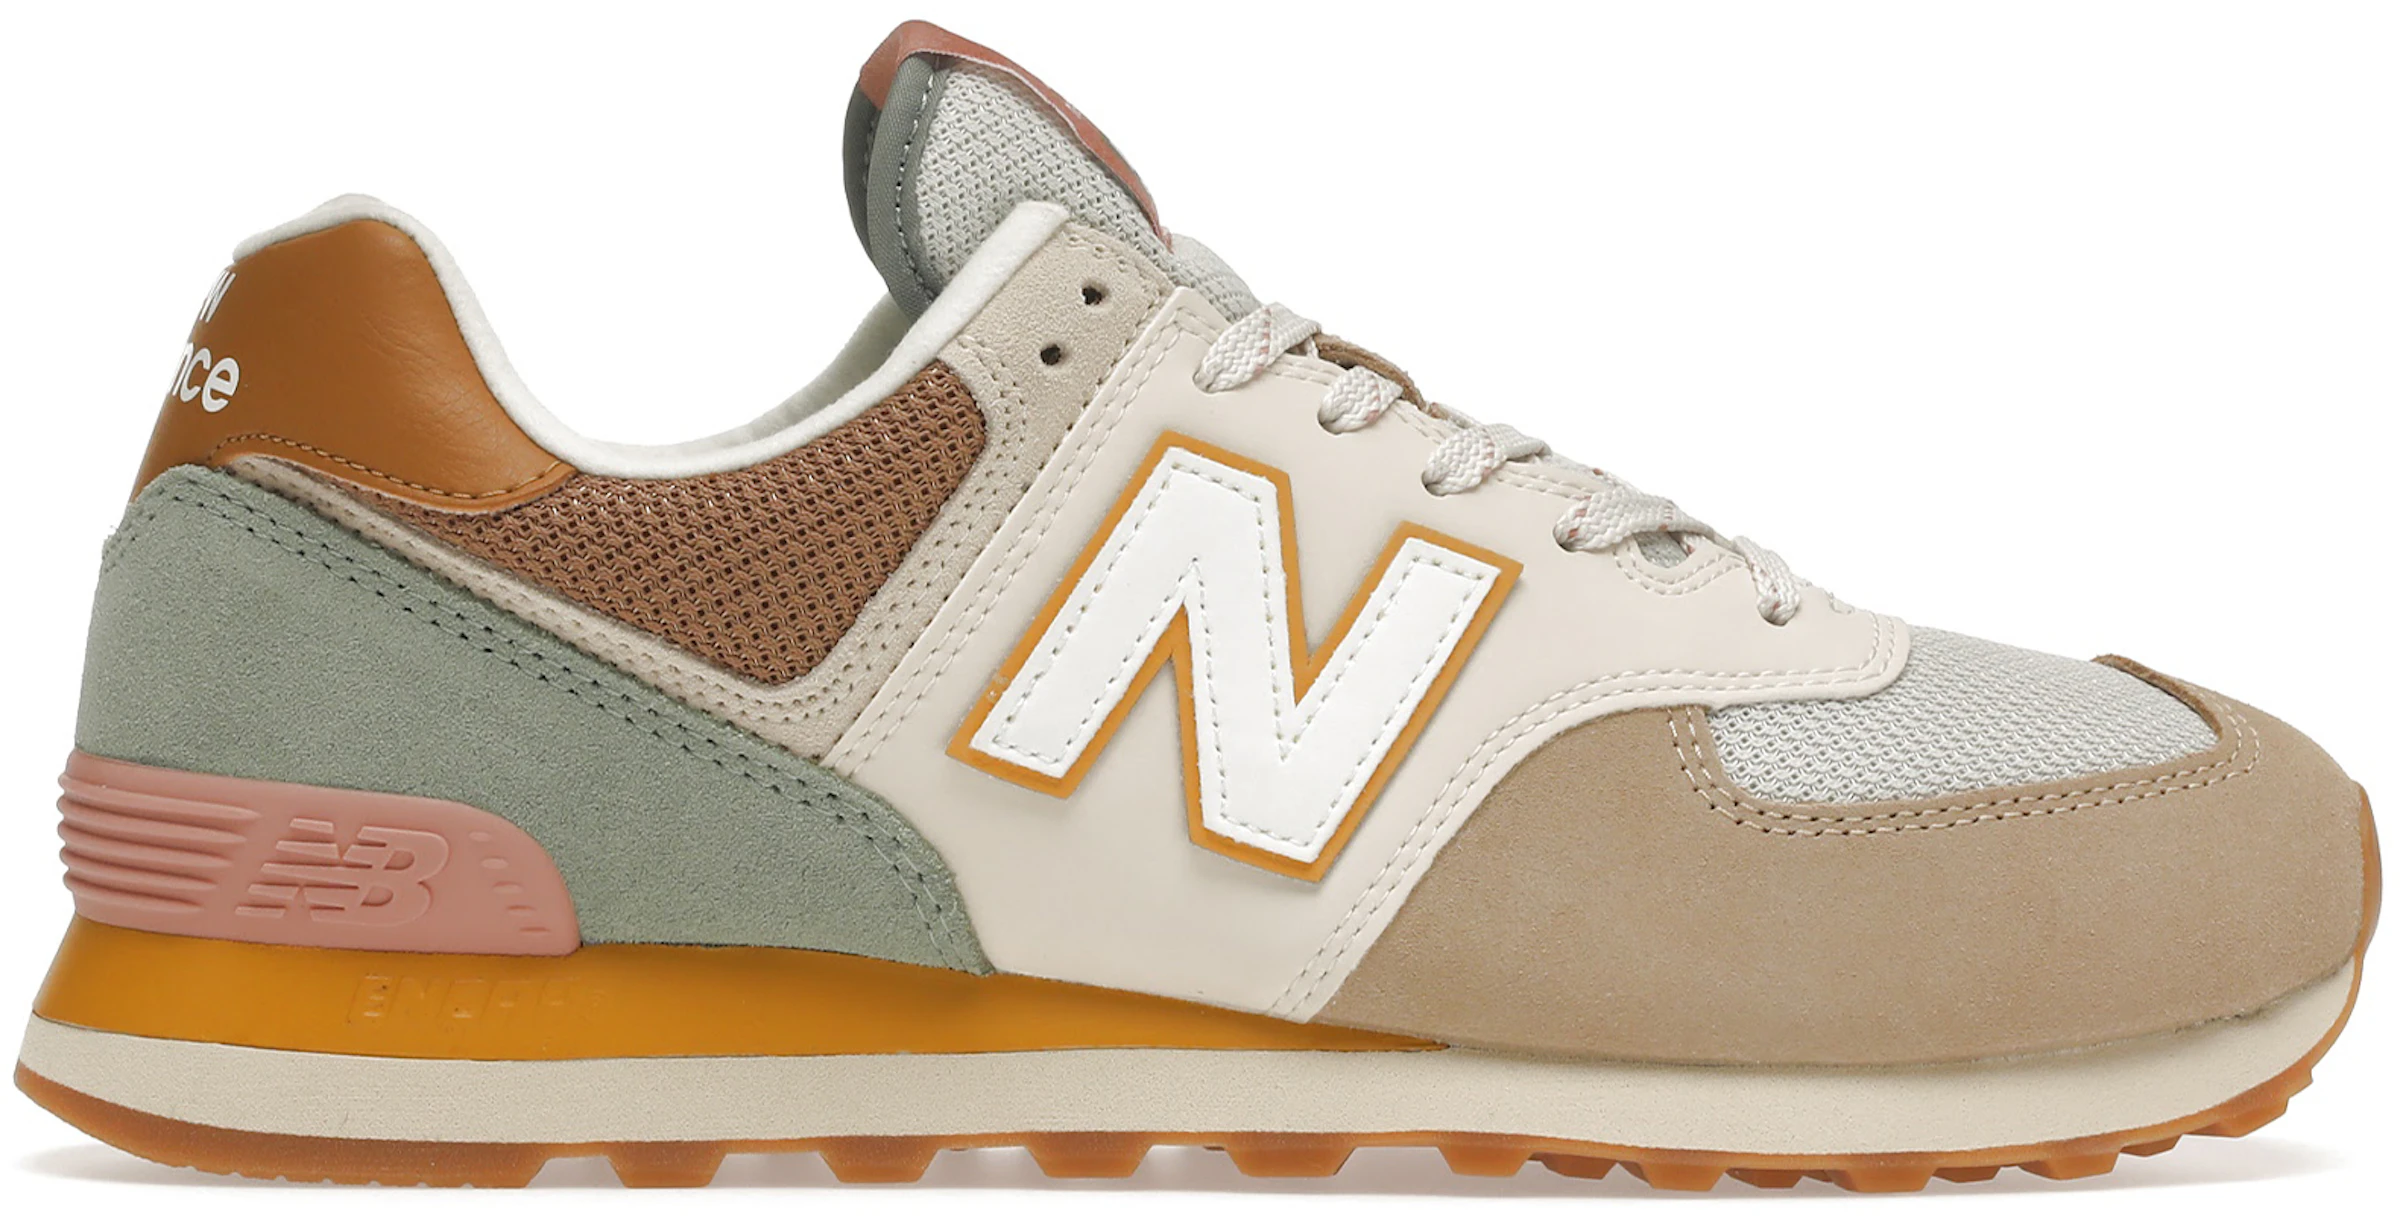 New Balance Drops 574 Sneaker In Brown/Beige Colorway Hypebeast ...